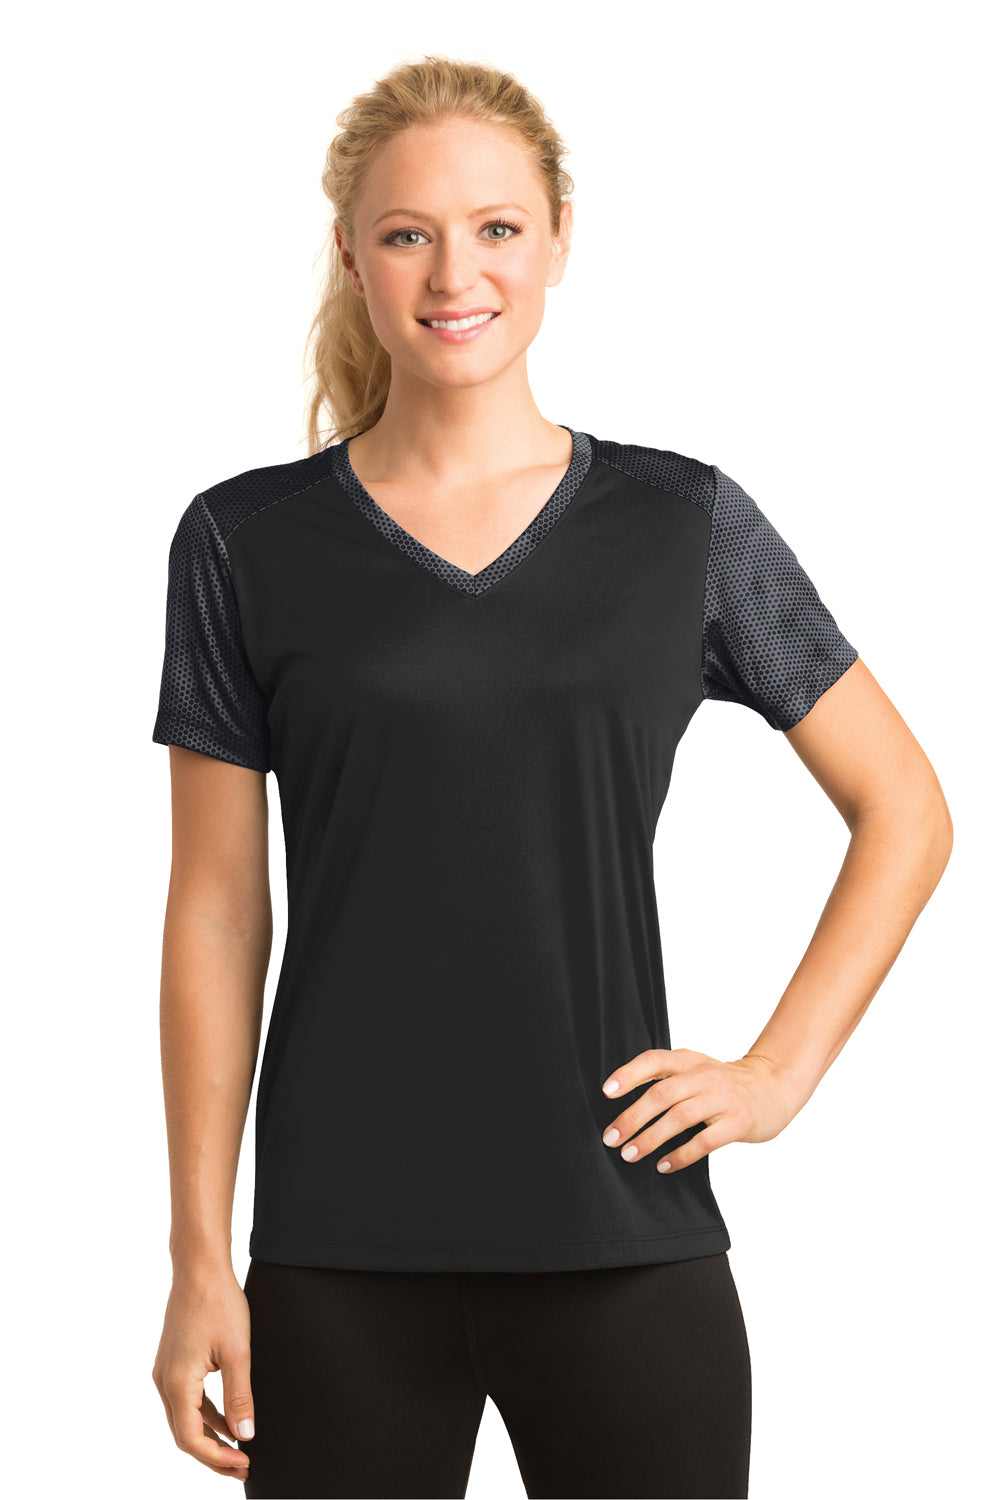 Sport-Tek LST371 Womens CamoHex Moisture Wicking Short Sleeve V-Neck T-Shirt Black/Grey Front